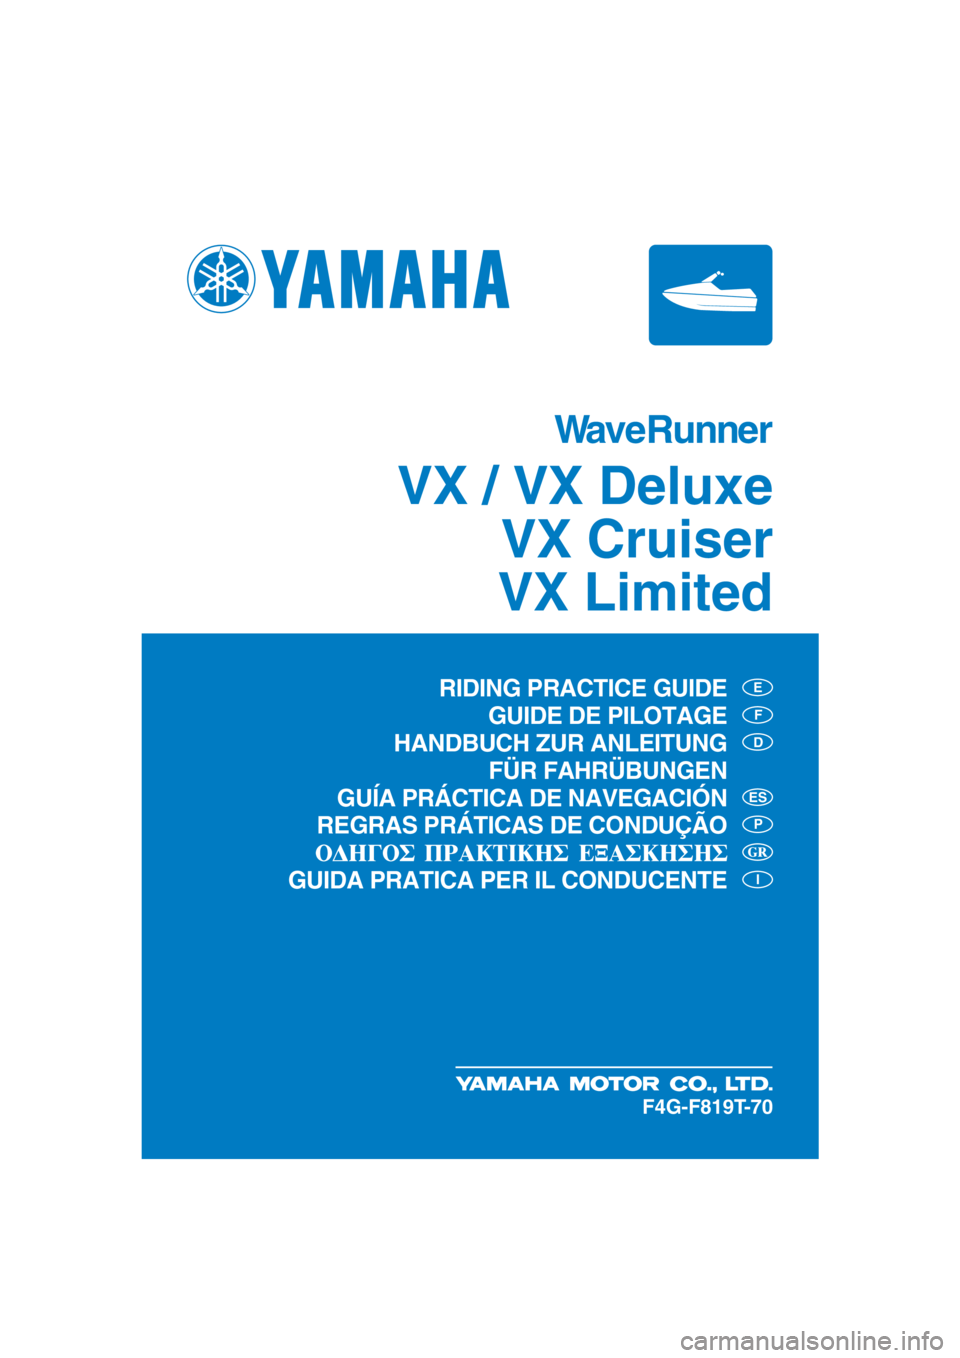 YAMAHA VX DELUXE 2016  Manuale de Empleo (in Spanish) WaveRunner
VX / VX Deluxe
VX Cruiser
VX Limited
E
F
D
P
I
ES
F4G-F819T-70
RIDING PRACTICE GUIDE
GUIDE DE PILOTAGE
HANDBUCH ZUR ANLEITUNG
 FÜR FAHRÜBUNGEN
GUÍA PRÁCTICA DE NAVEGACIÓN
REGRAS PRÁTI